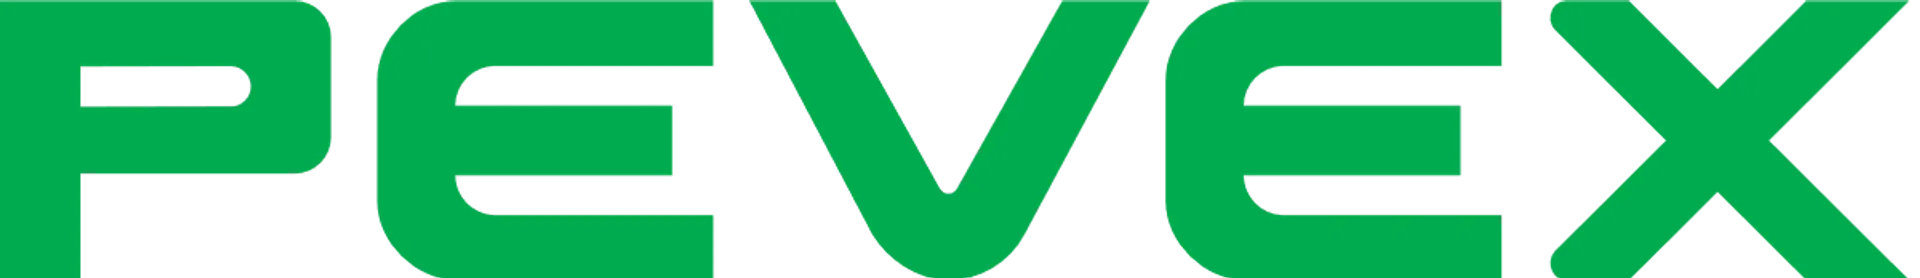 PEVEX logo